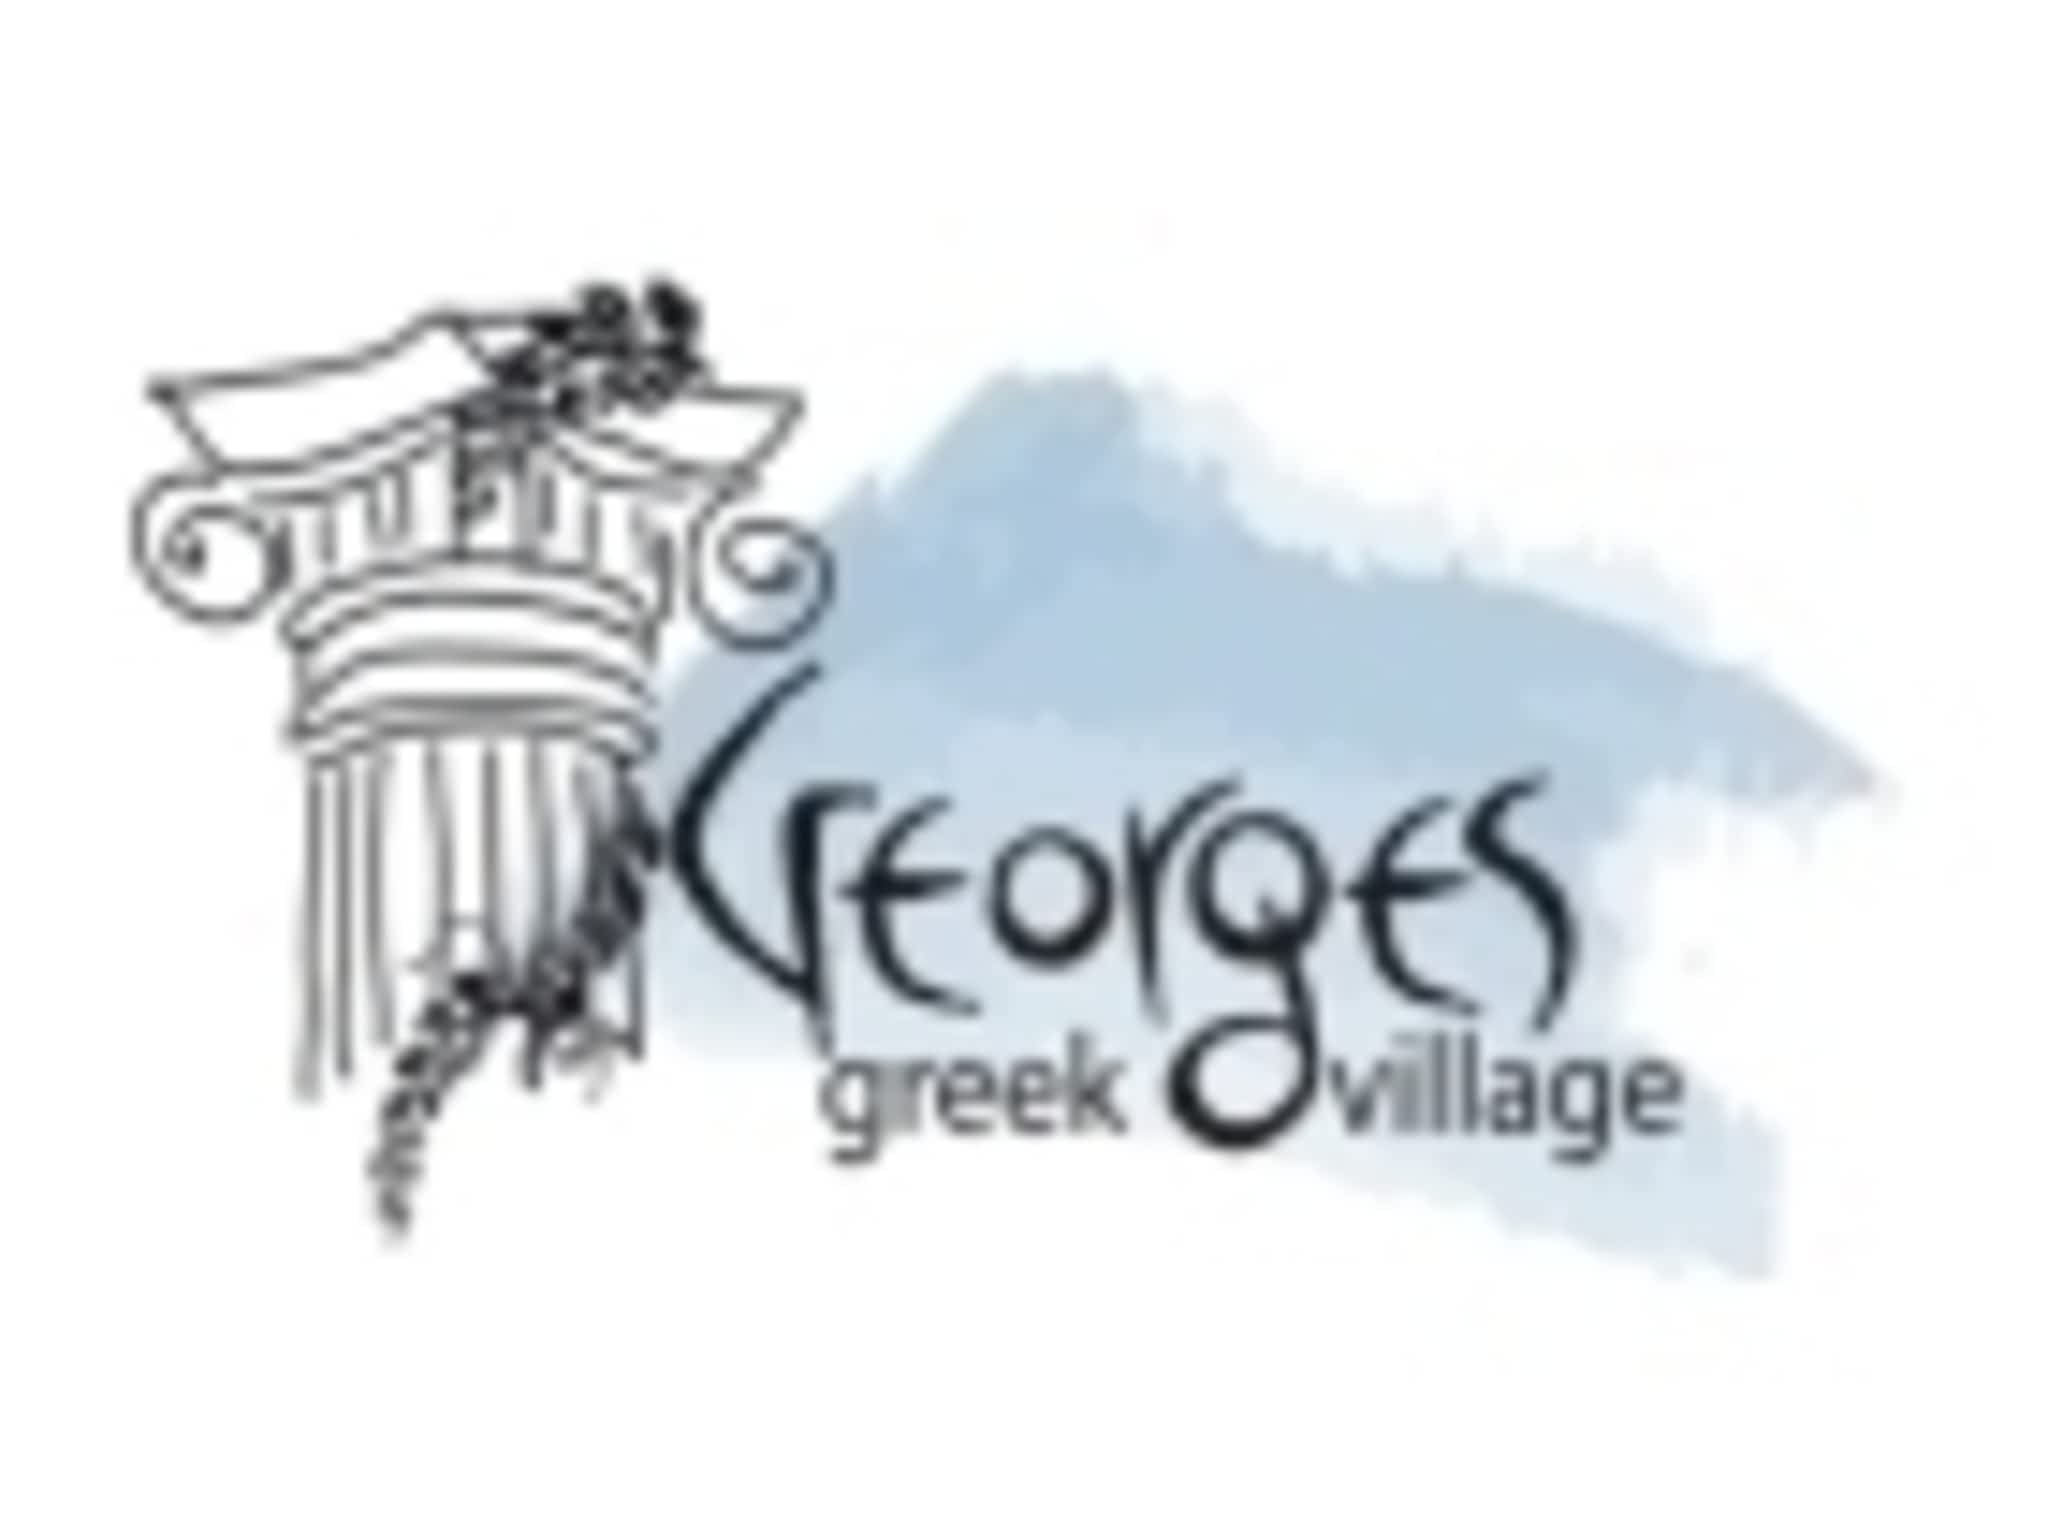 photo George's Greek Village